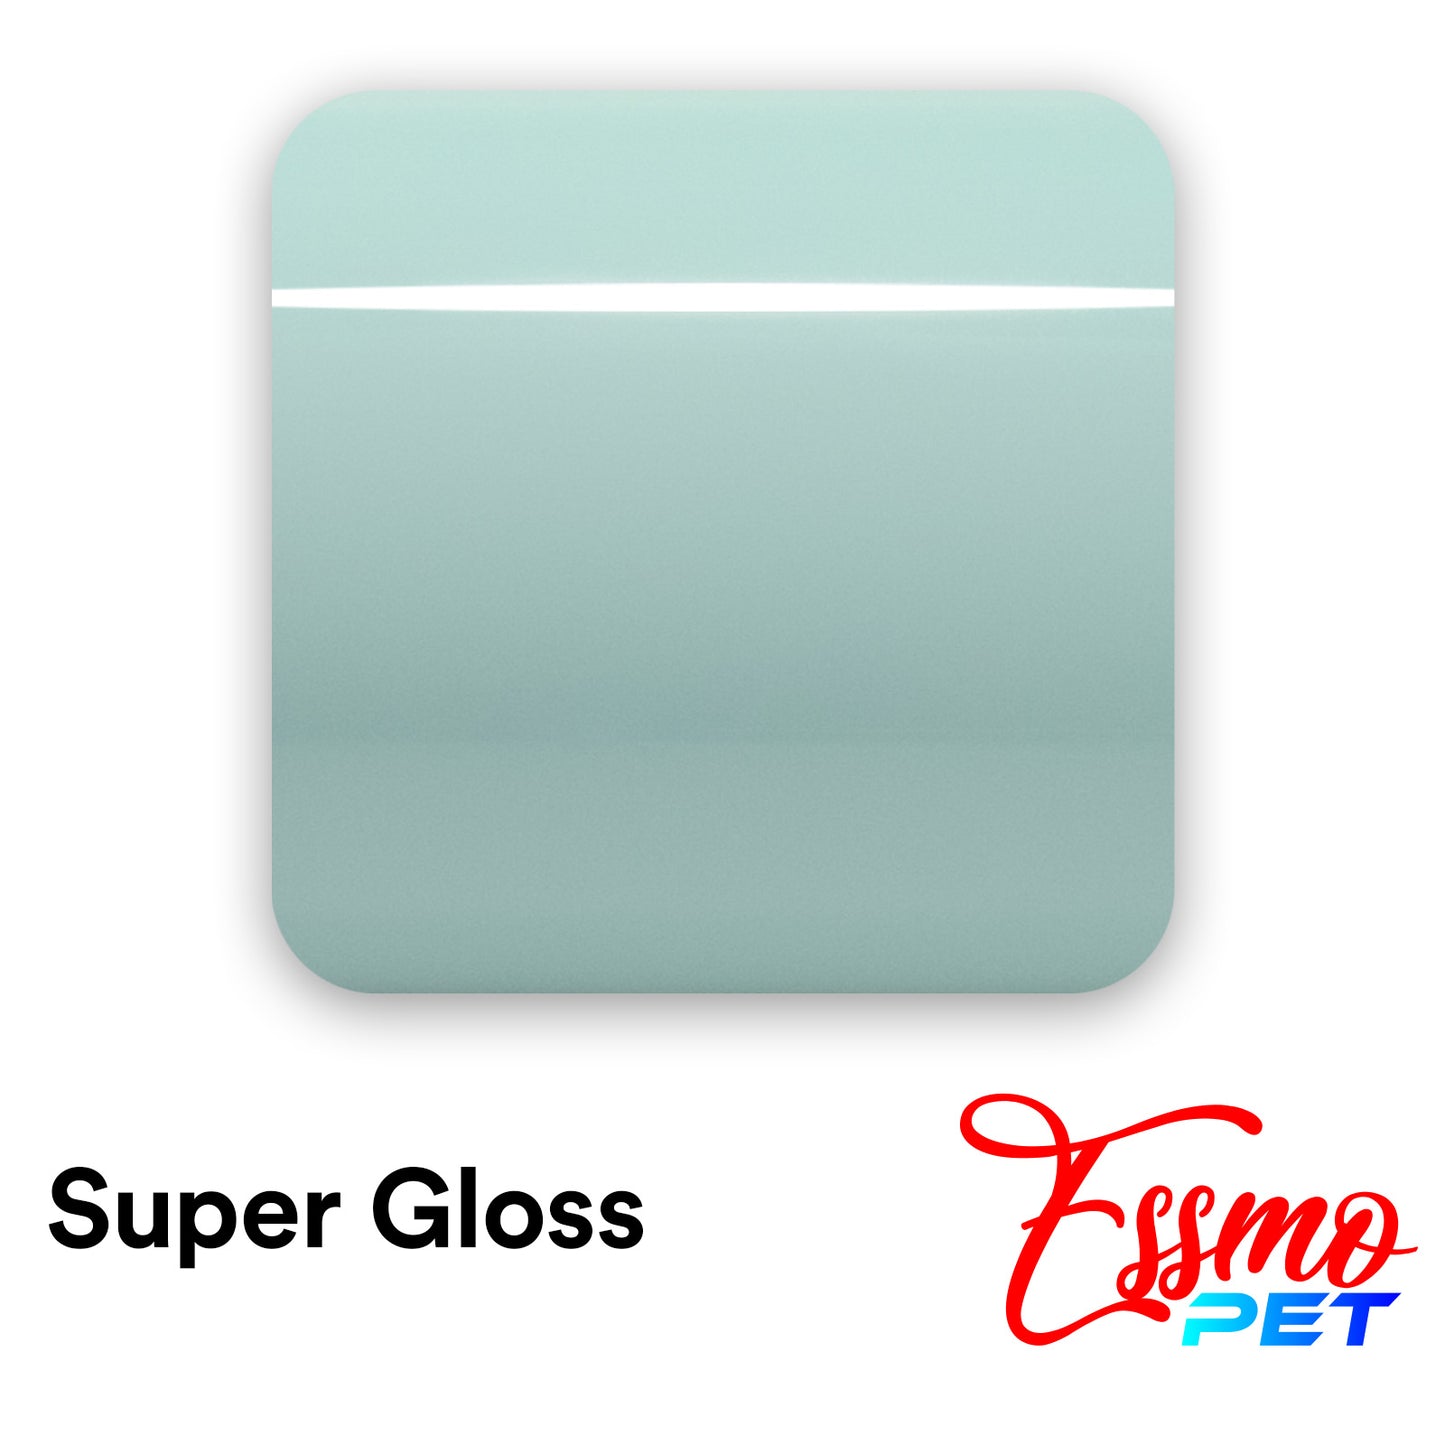 PET Super Gloss Ocean Mist Teal Vinyl Wrap